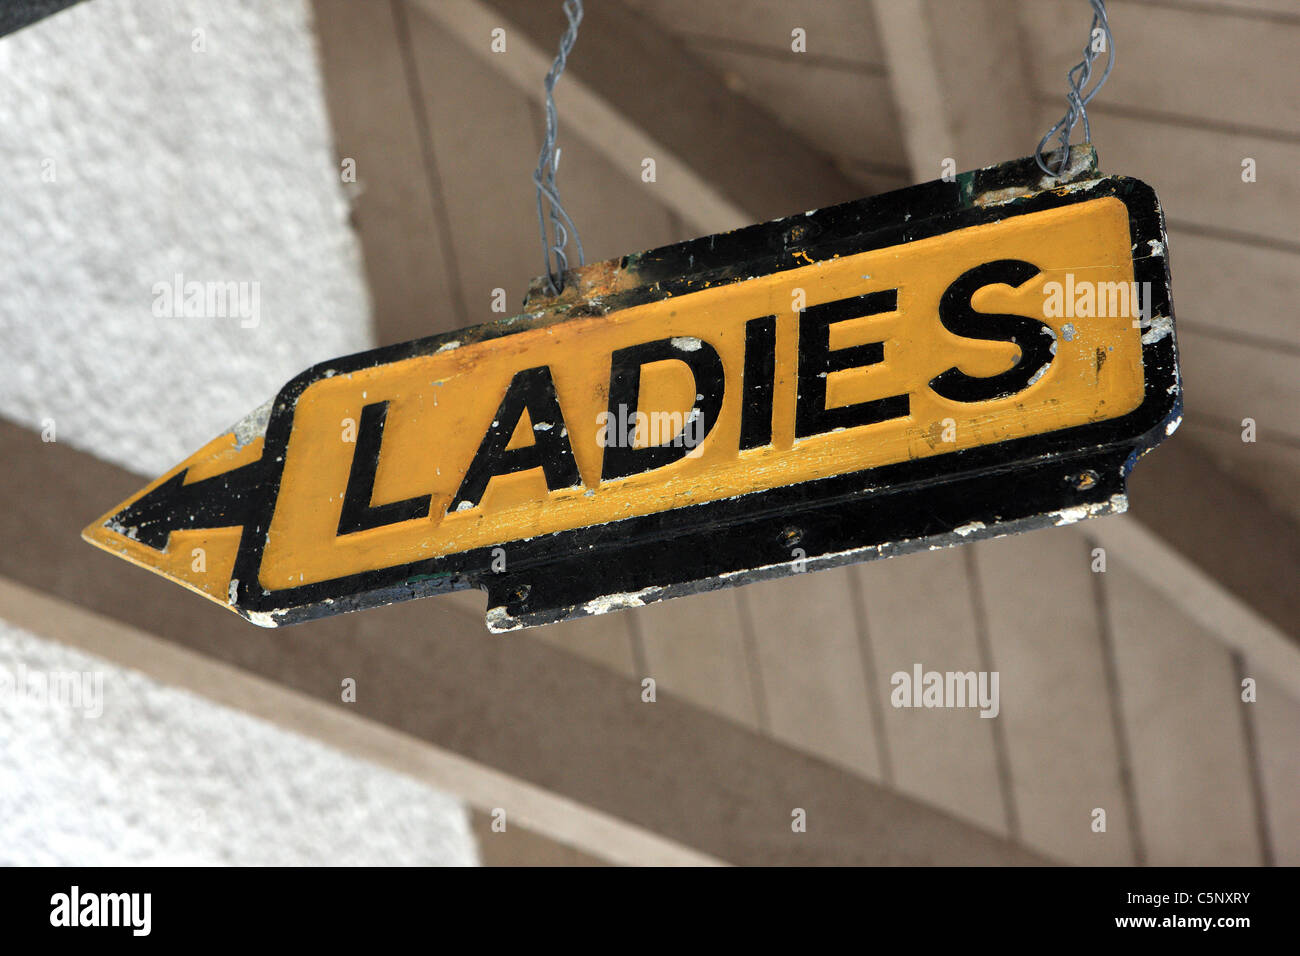 Ladies toilet sign Stock Photo